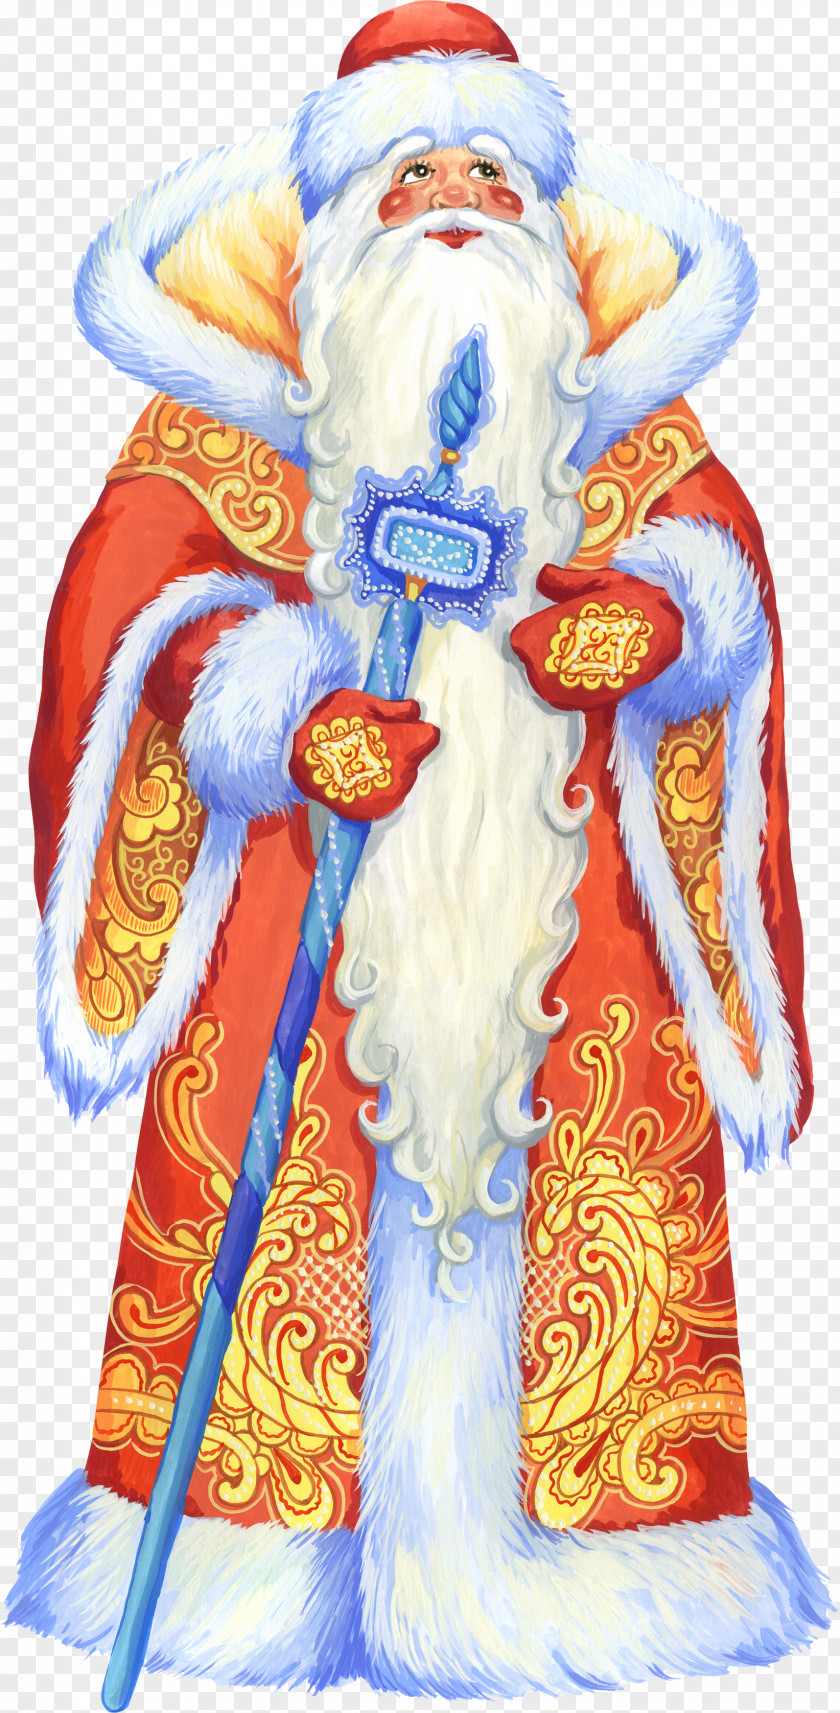 Santa Claus Ded Moroz Snegurochka Christmas Clip Art PNG